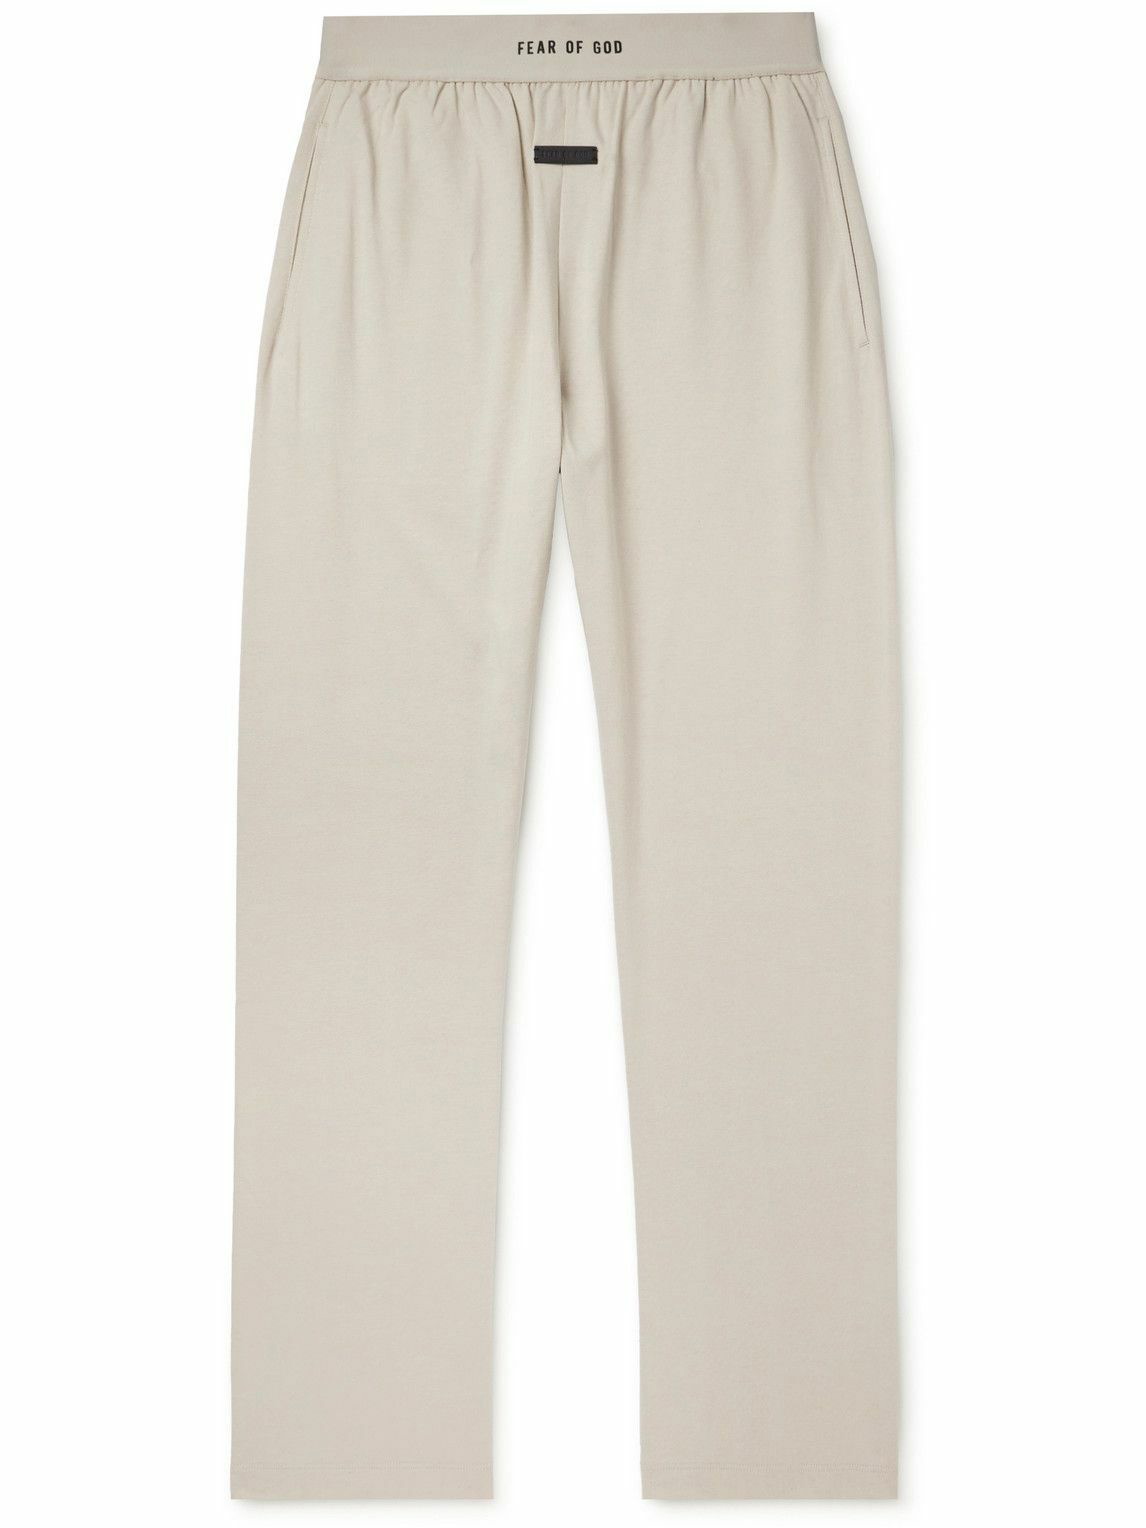 Photo: Fear of God - Logo-Appliquéd Cotton-Jersey Pyjama Trousers - Neutrals